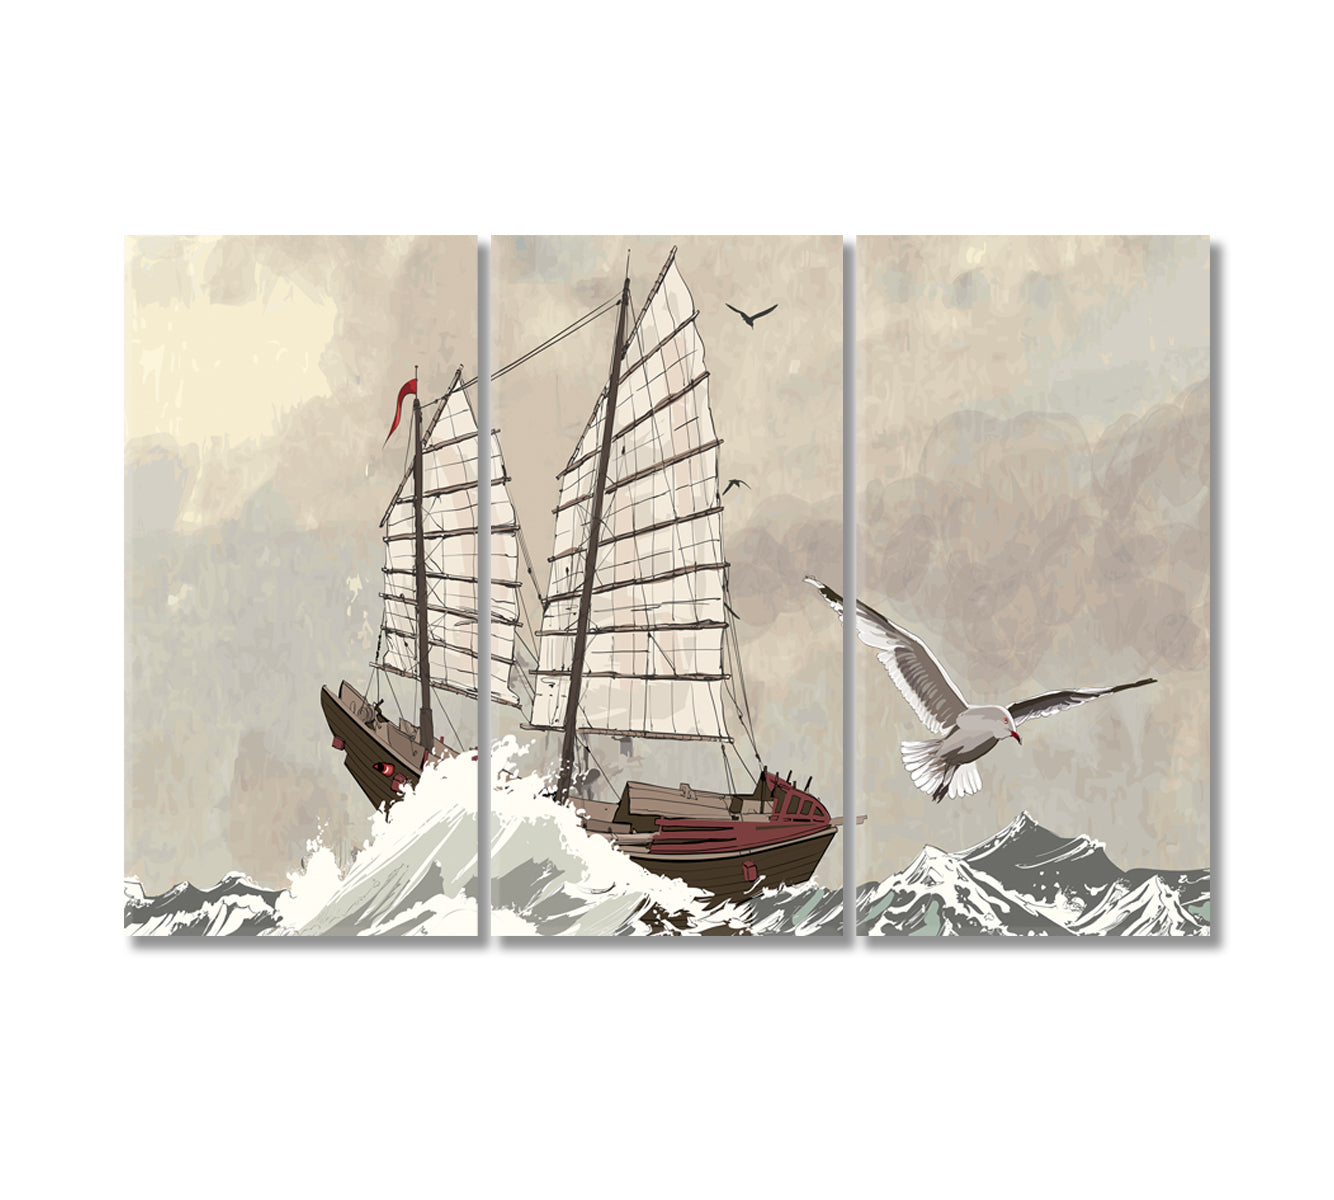 Old Sailing Ship Canvas Interior Design-Canvas Print-CetArt-3 Panels-36x24 inches-CetArt